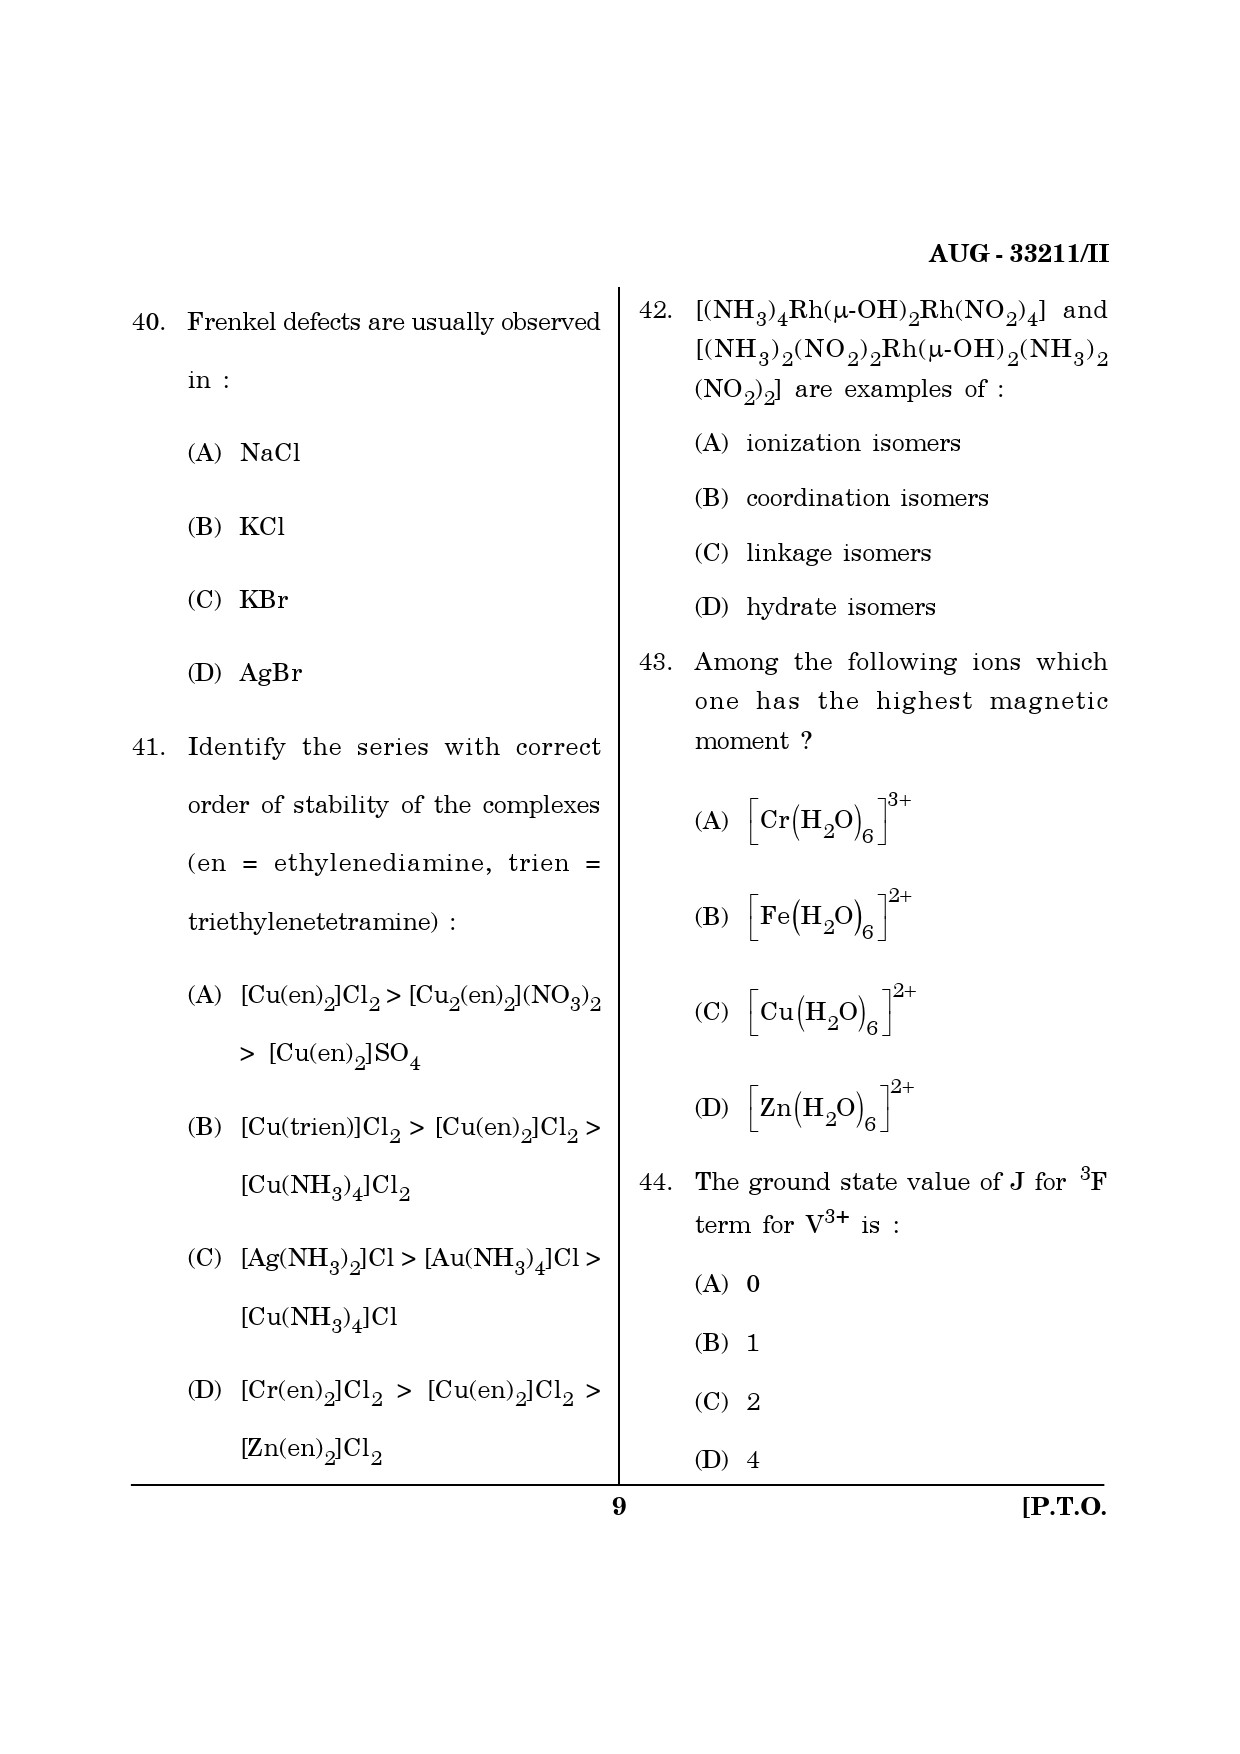 Maharashtra SET Chemical Sciences Question Paper II August 2011 9